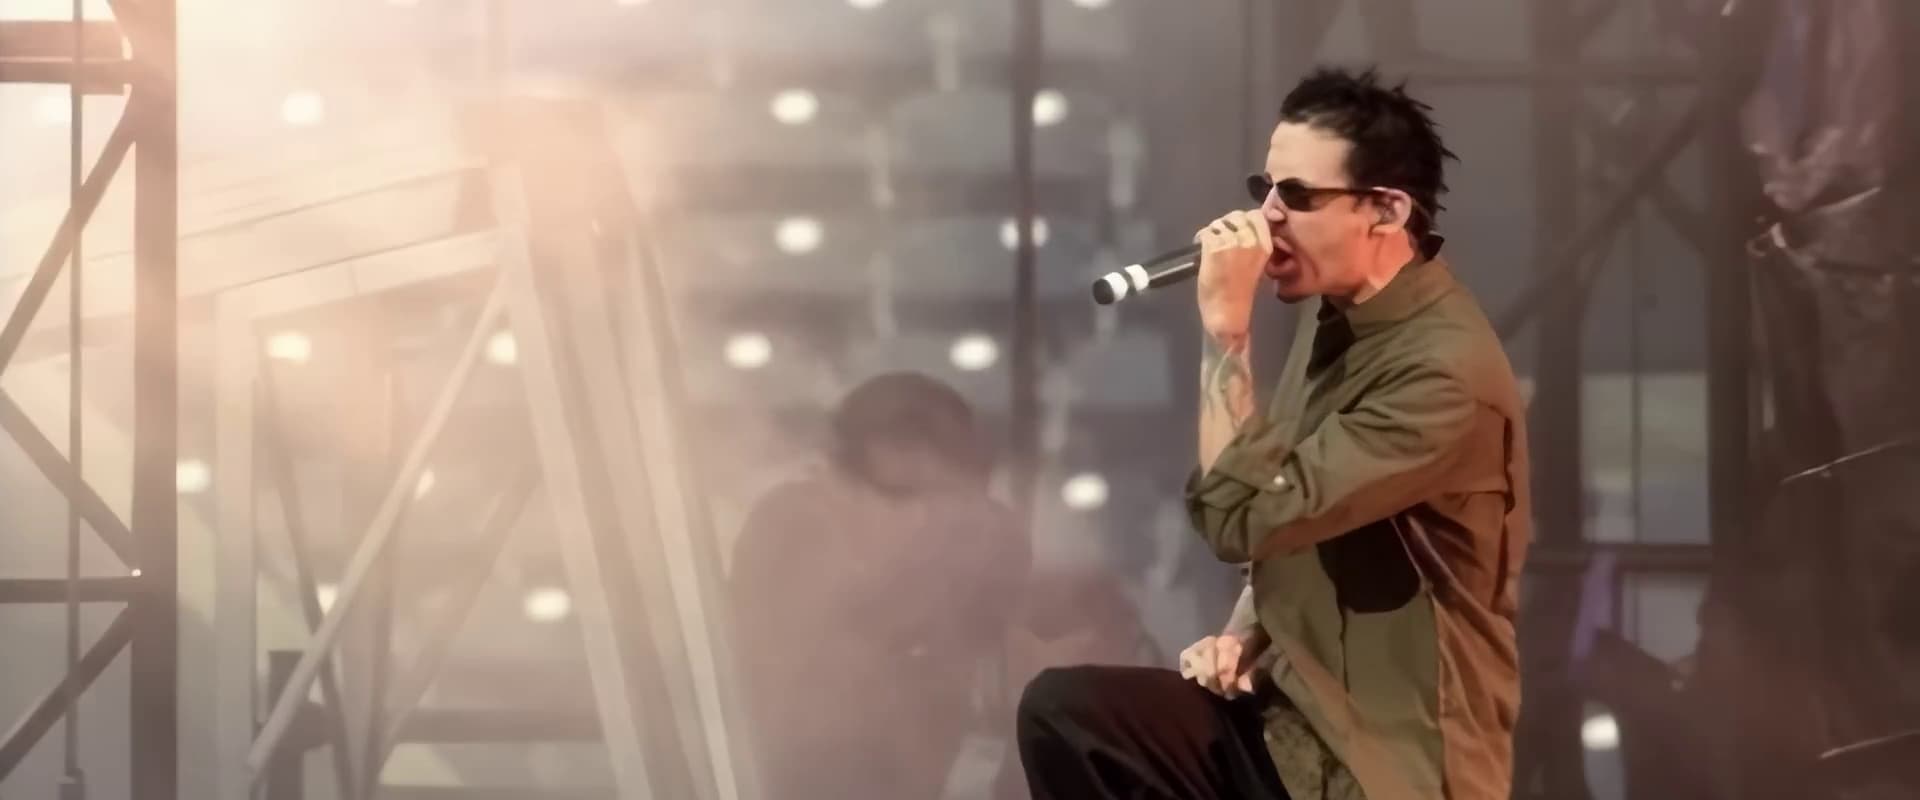 Linkin Park: Live in Texas